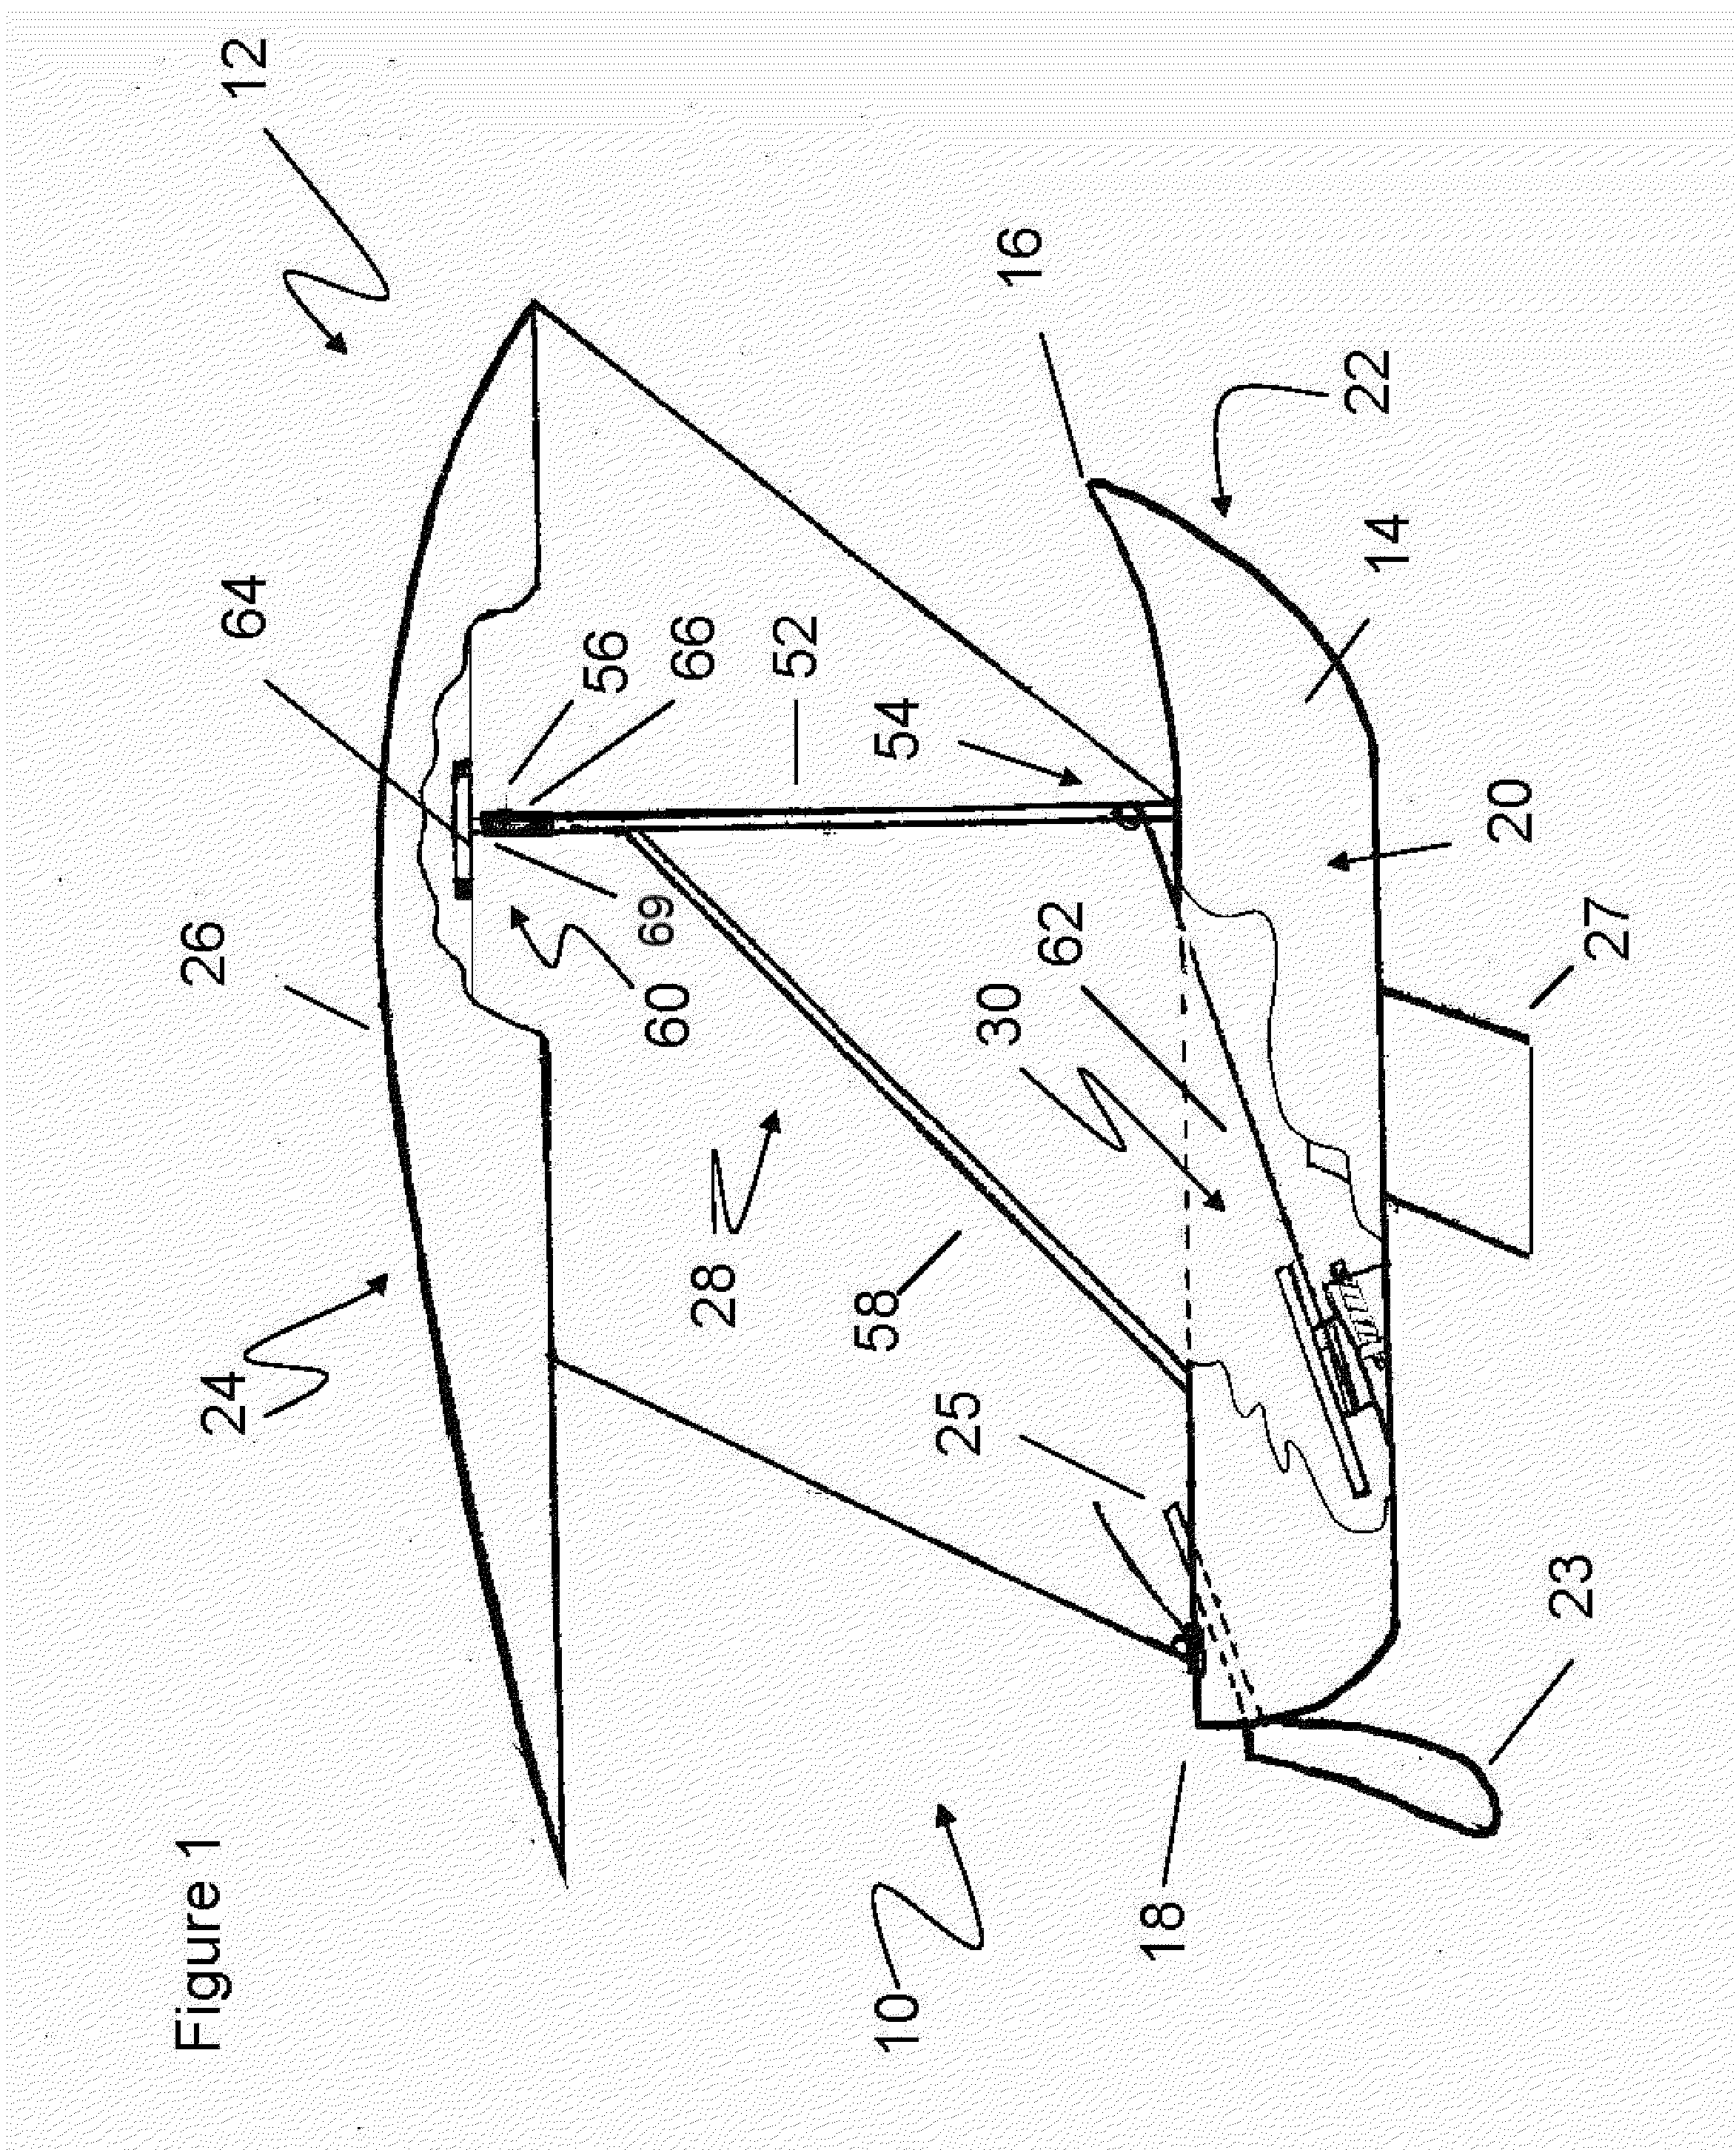 Sailing craft comprising a tilting rigid sail system